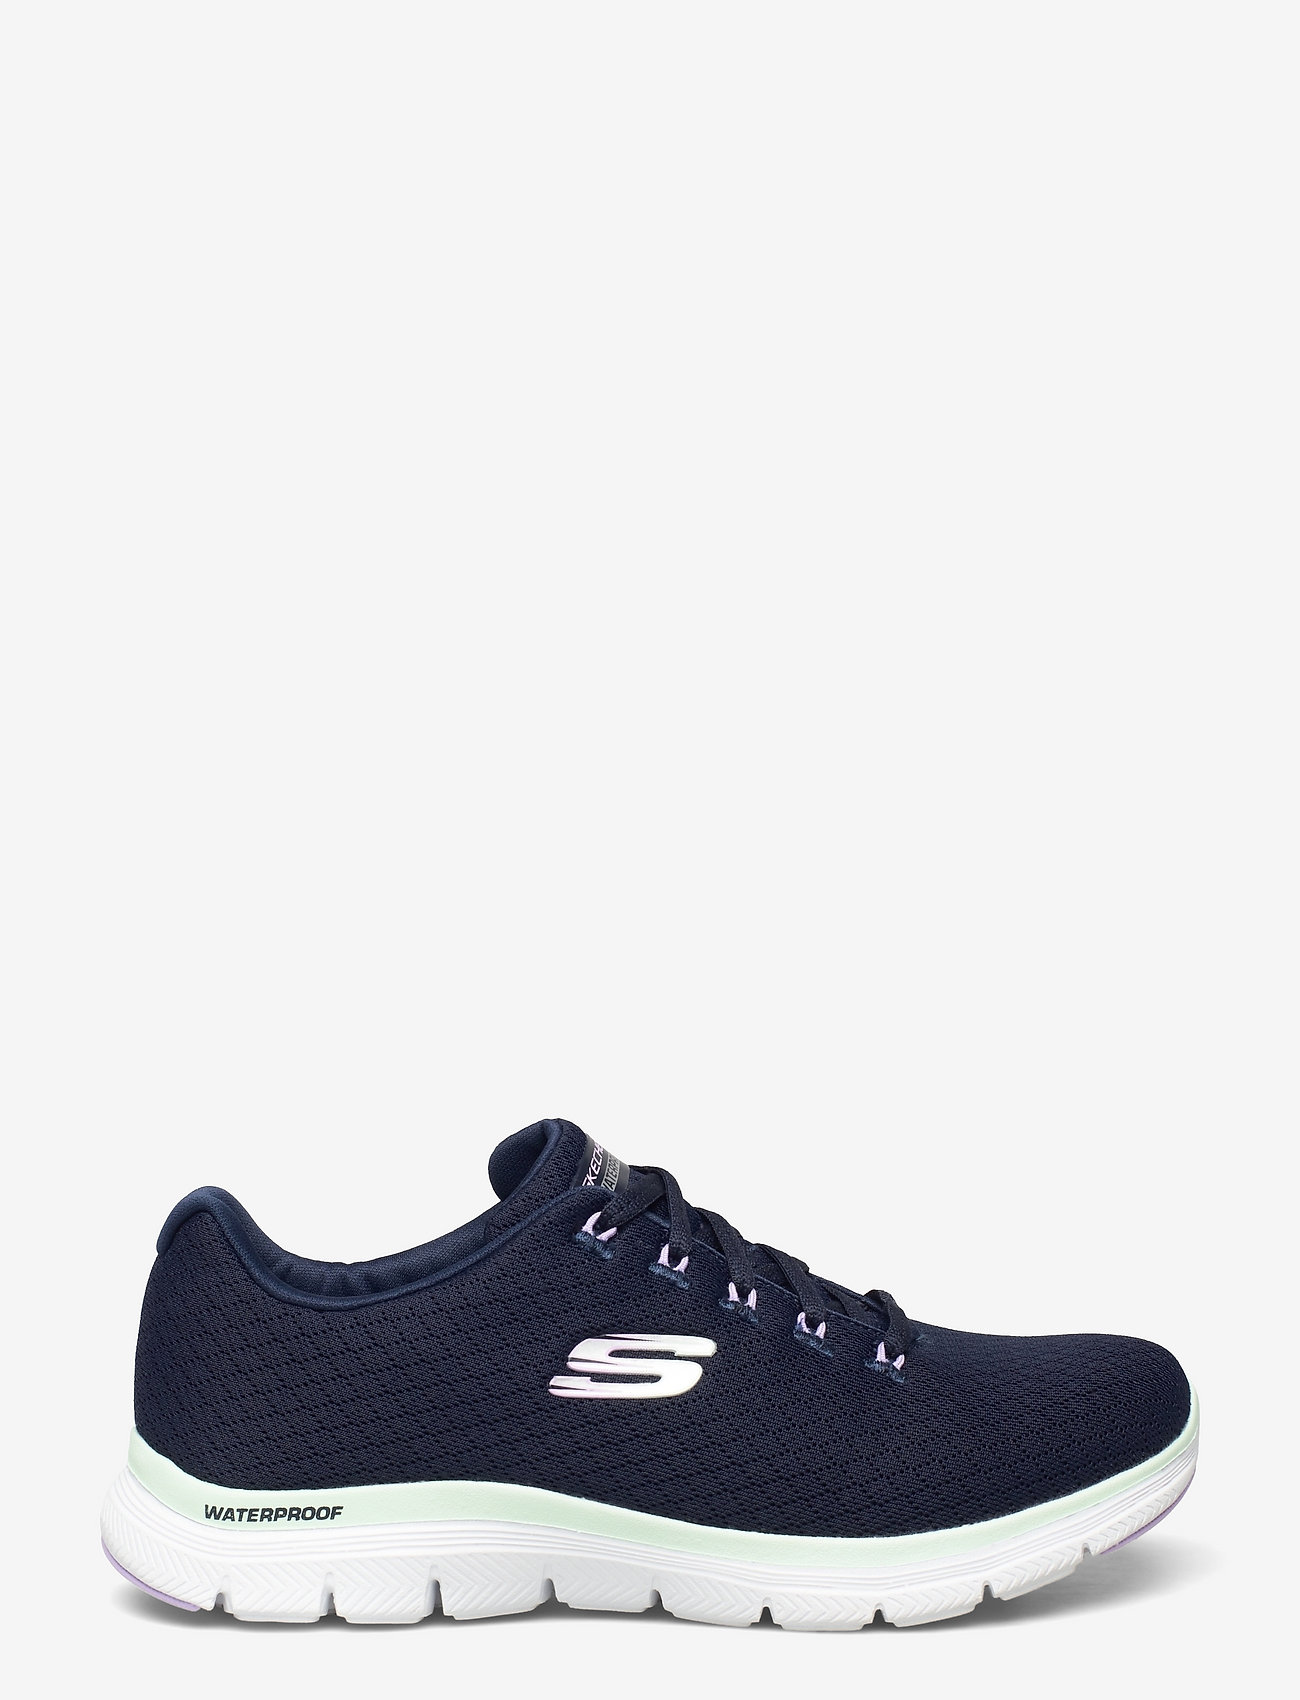 Skechers - Womens Flex Appeal 4.0 - Waterproof - sneakers med lavt skaft - nvaq navy aqua - 1